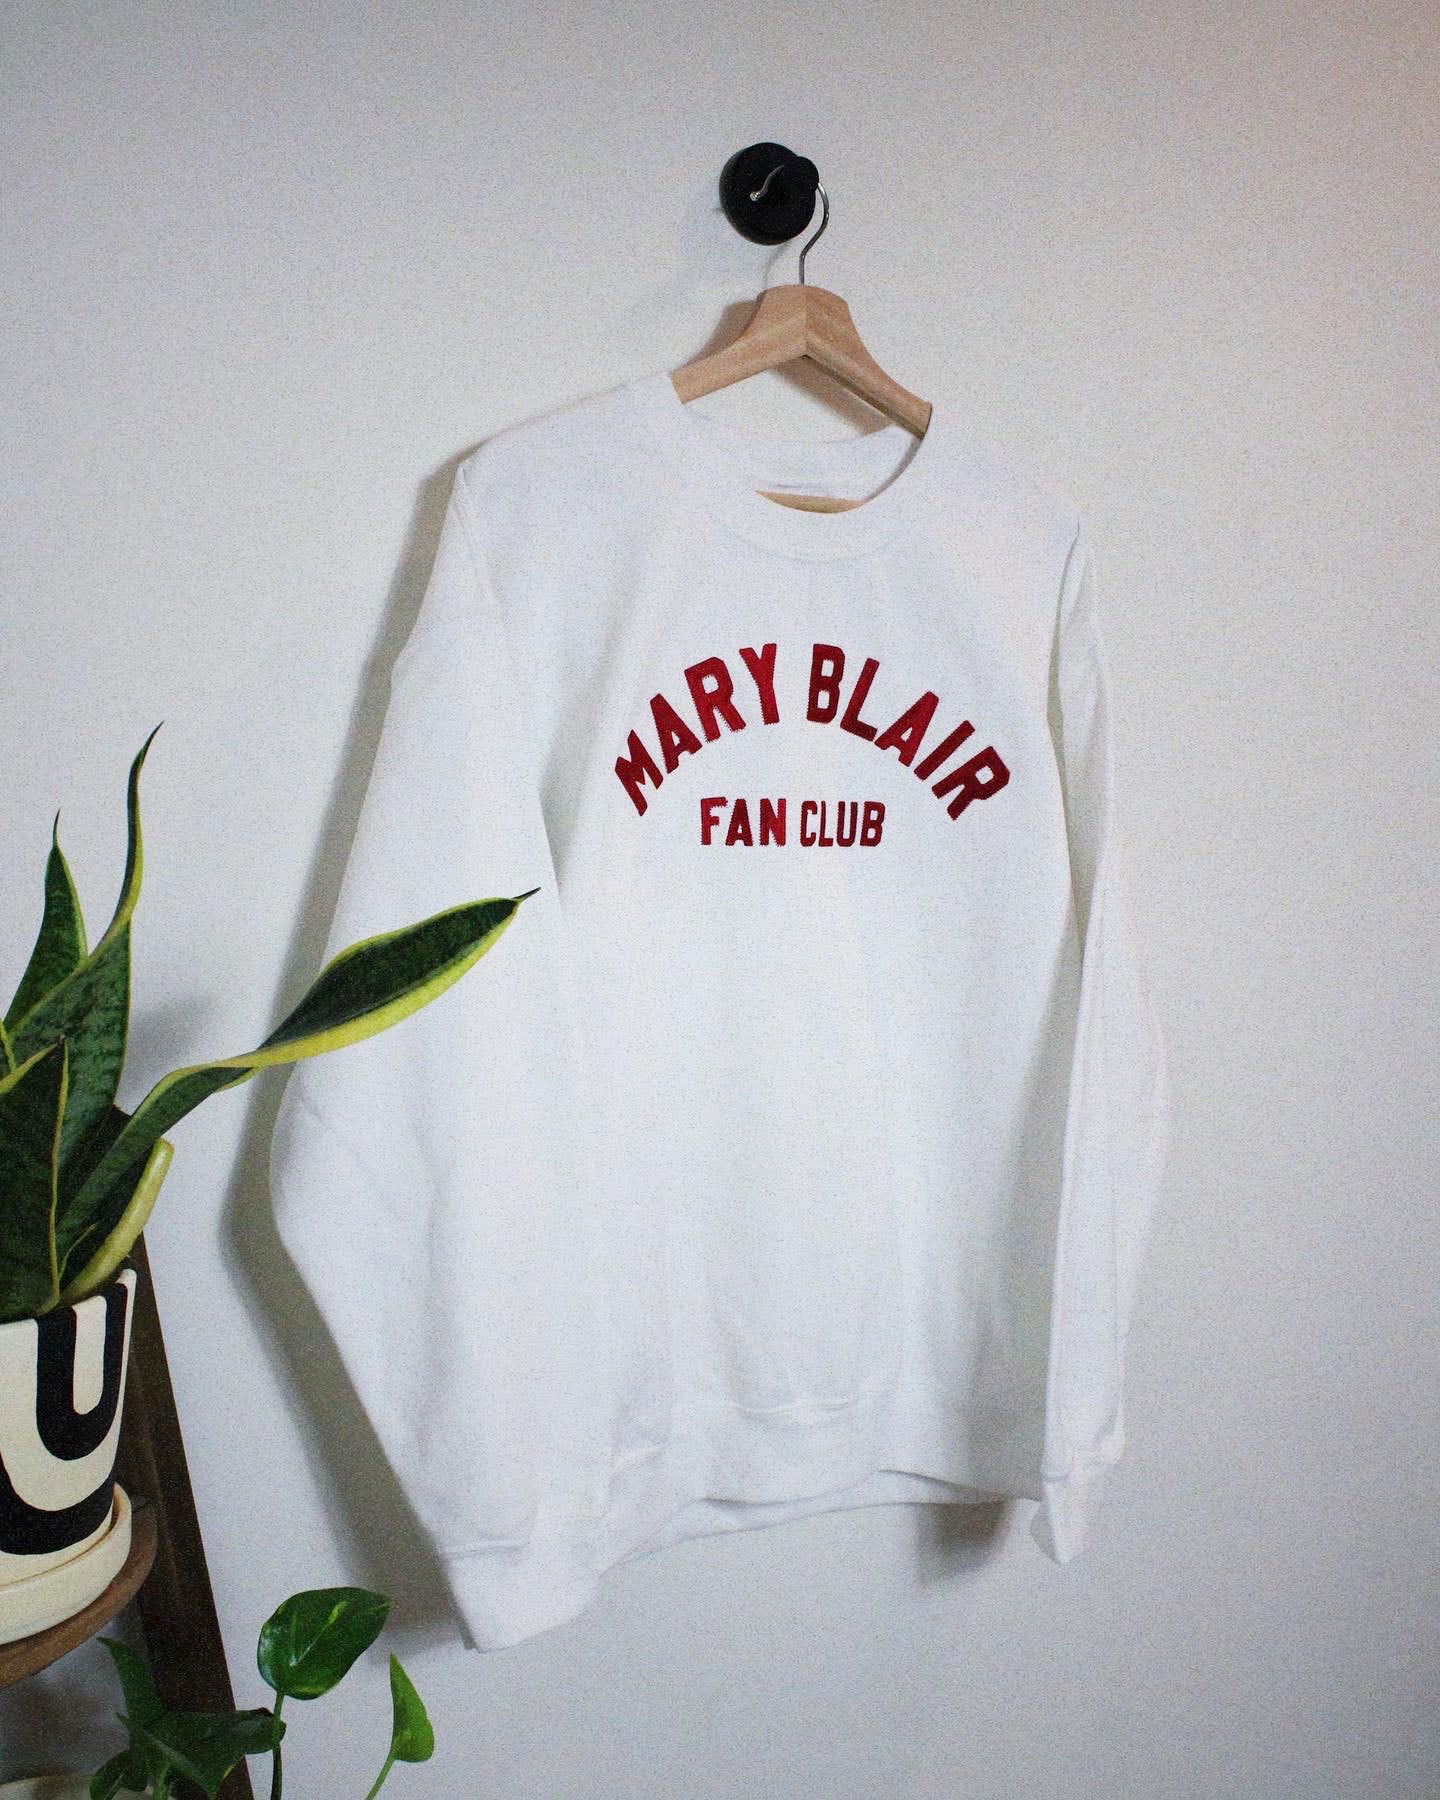 The Mary Blair Sweatshirt